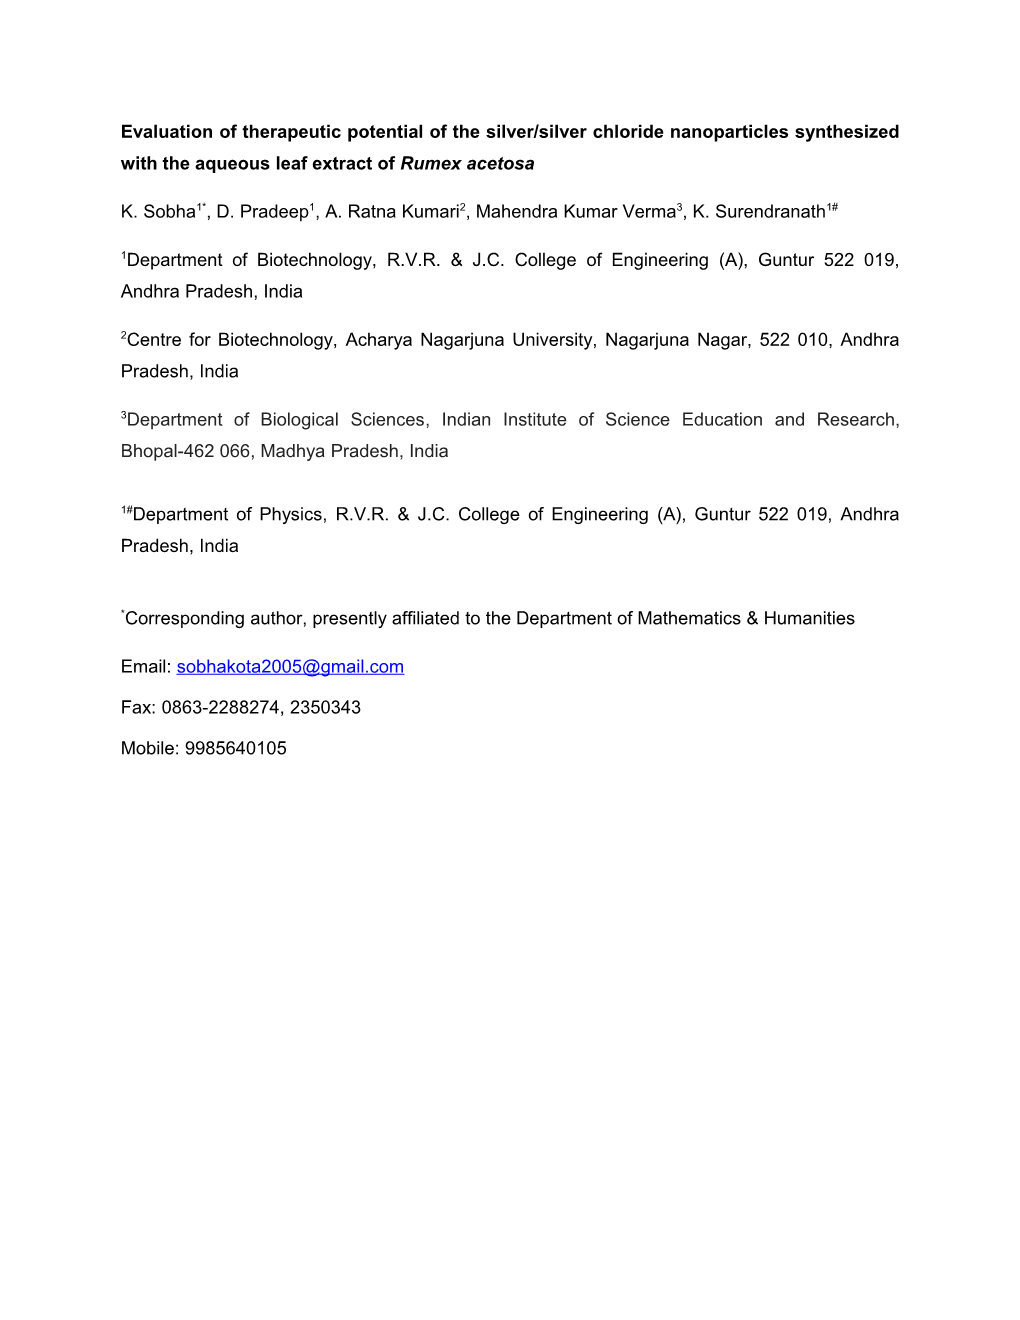 1Department of Biotechnology, R.V.R. & J.C. College of Engineering (A), Guntur 522 019